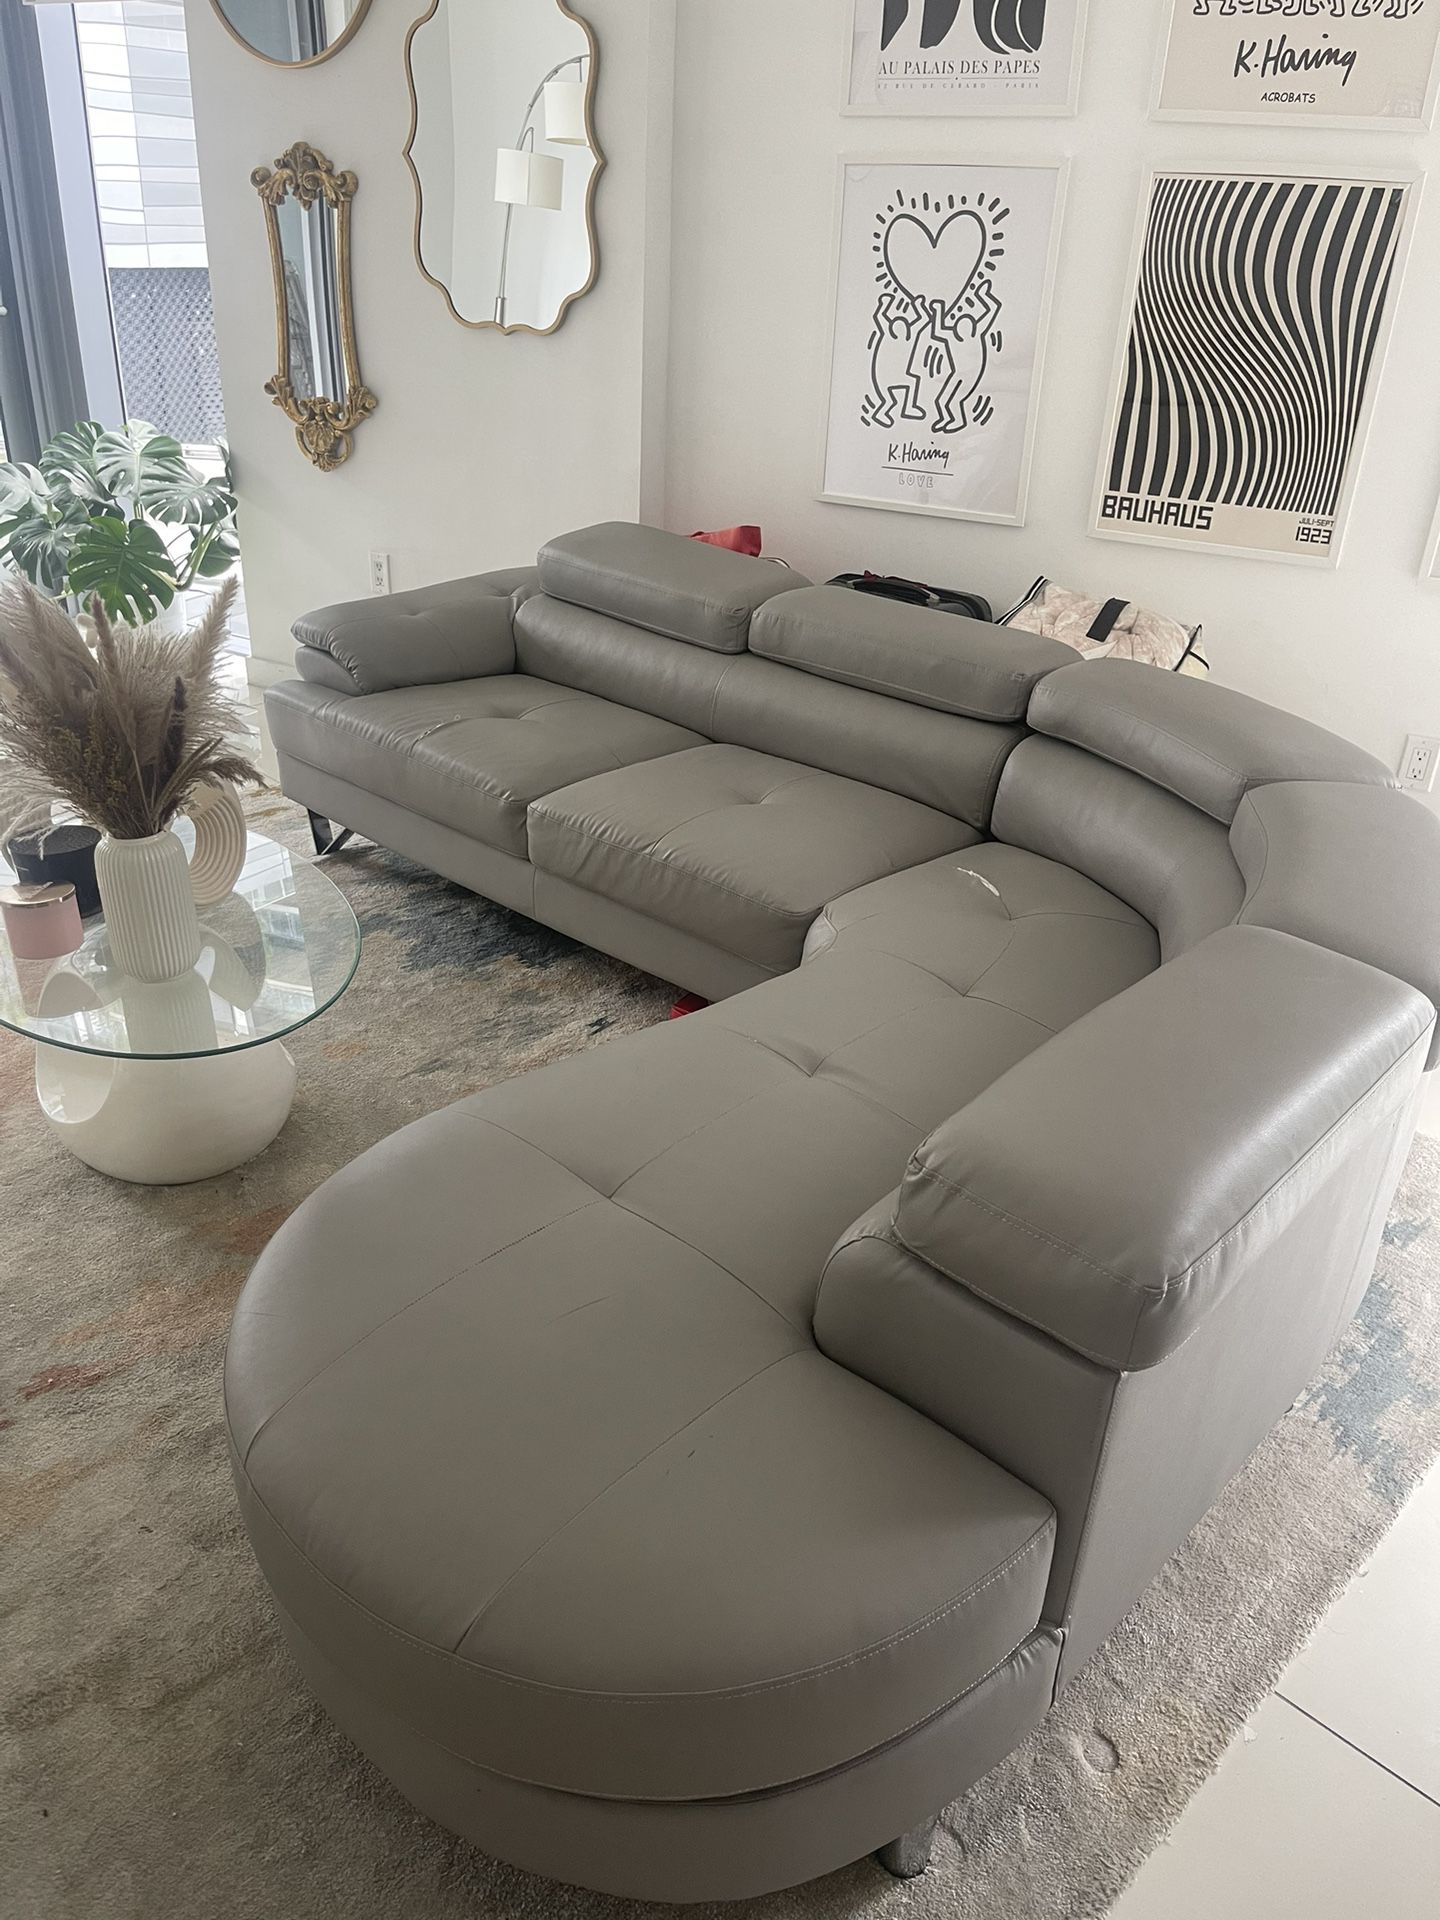 Leather Sofa for Sale in Miami, FL - OfferUp